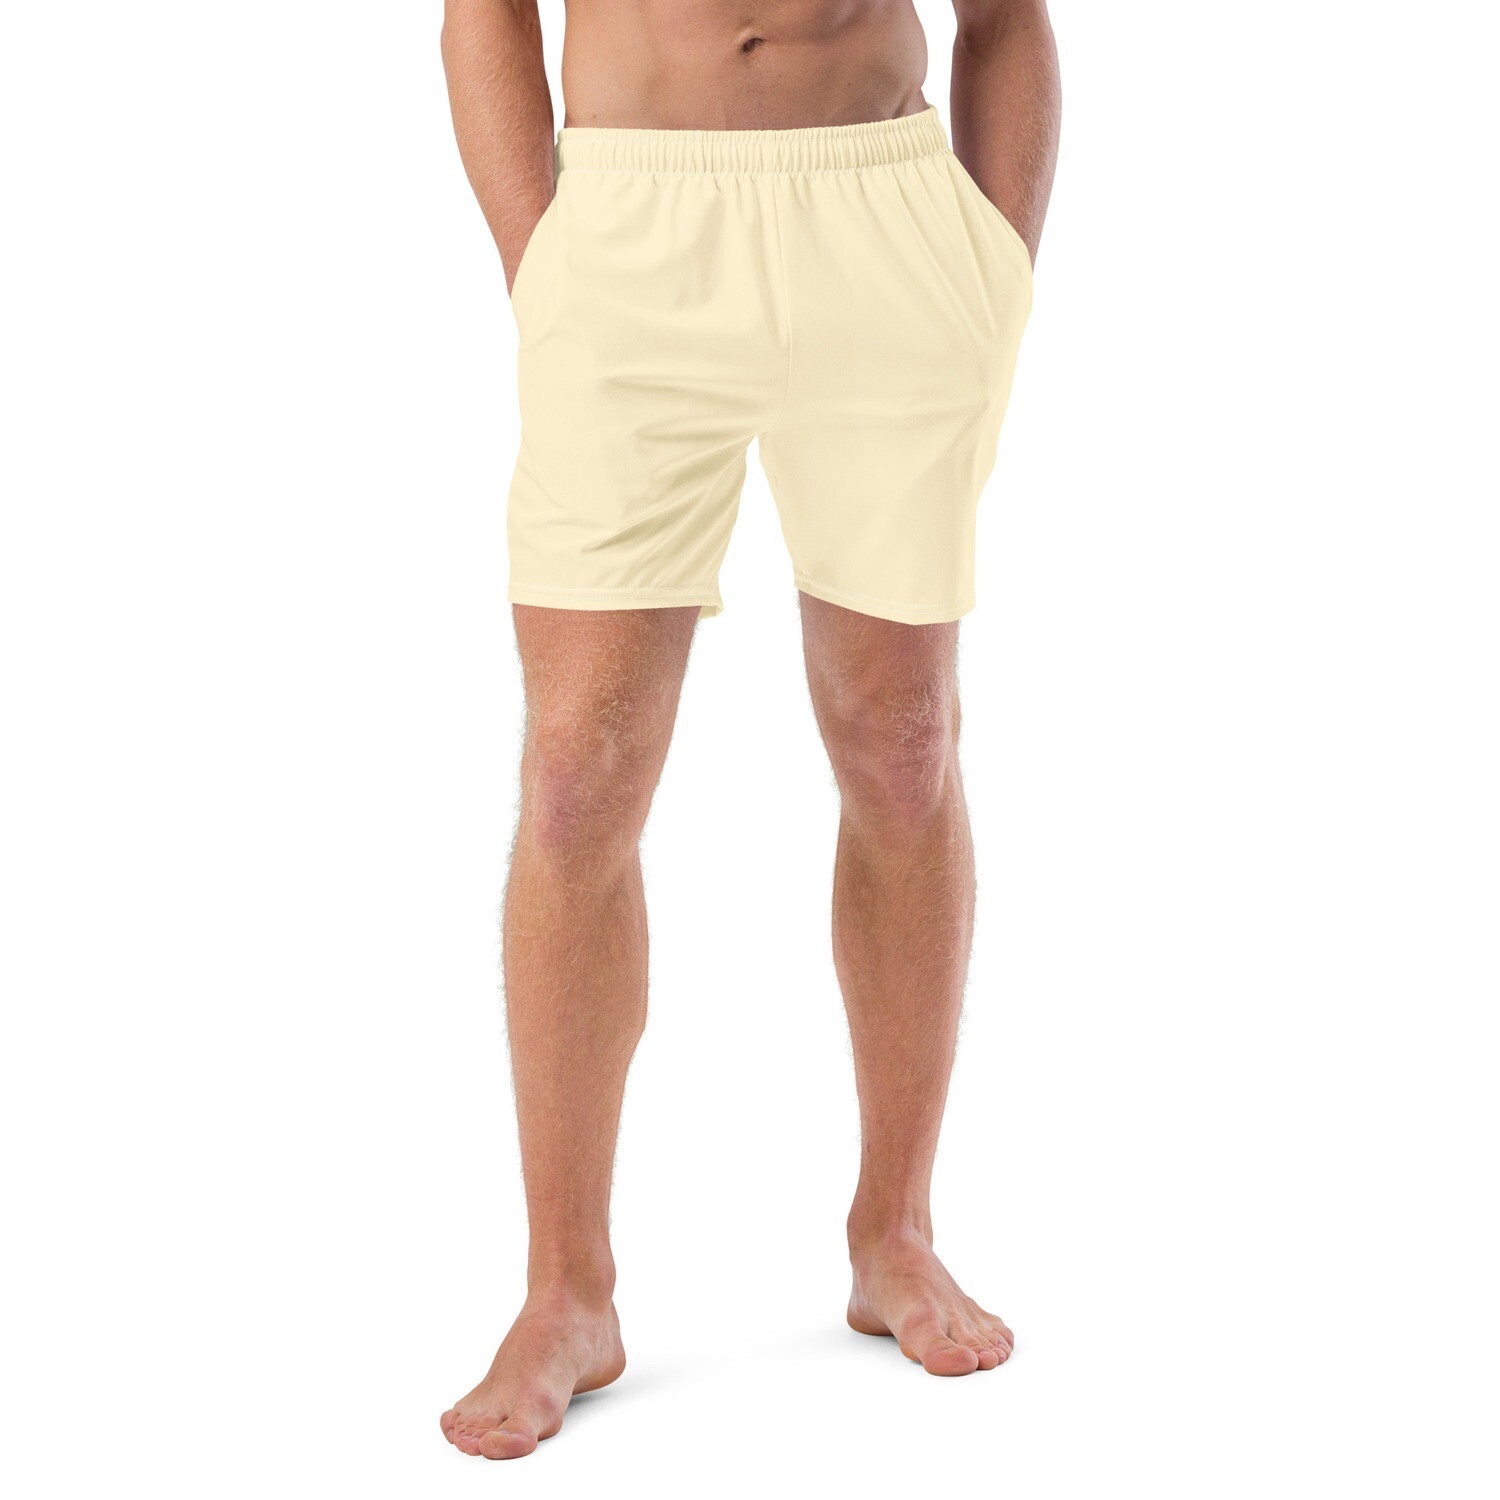 Men's retro yellow swim trunks in sizes 2XS-6XL